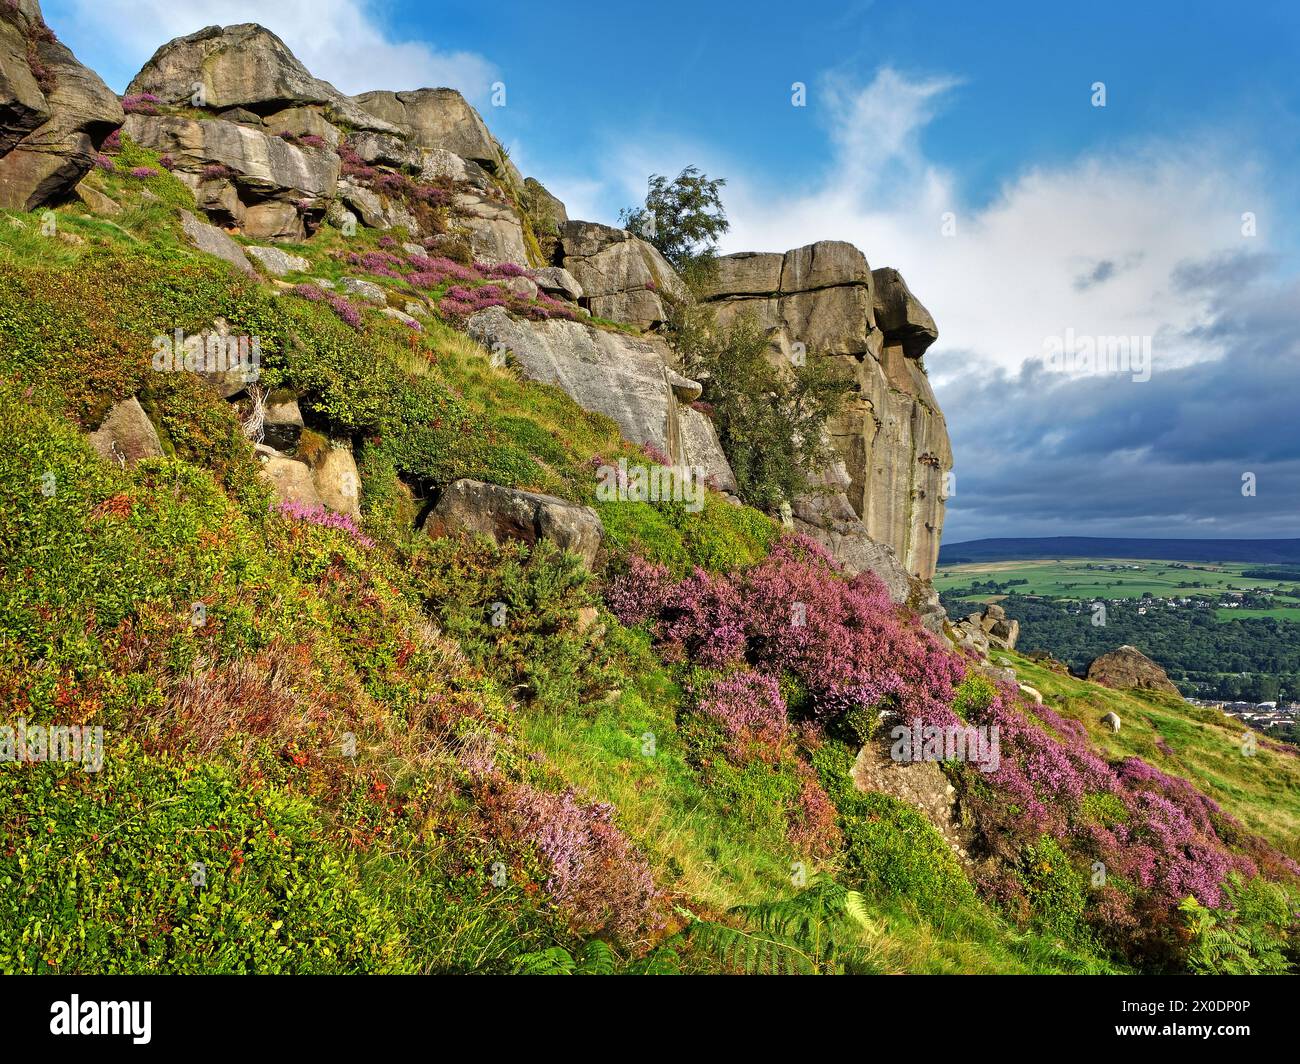 UK, West Yorkshire, Ilkley, Ilkley Moor Cow Rock Formation. Stock Photo